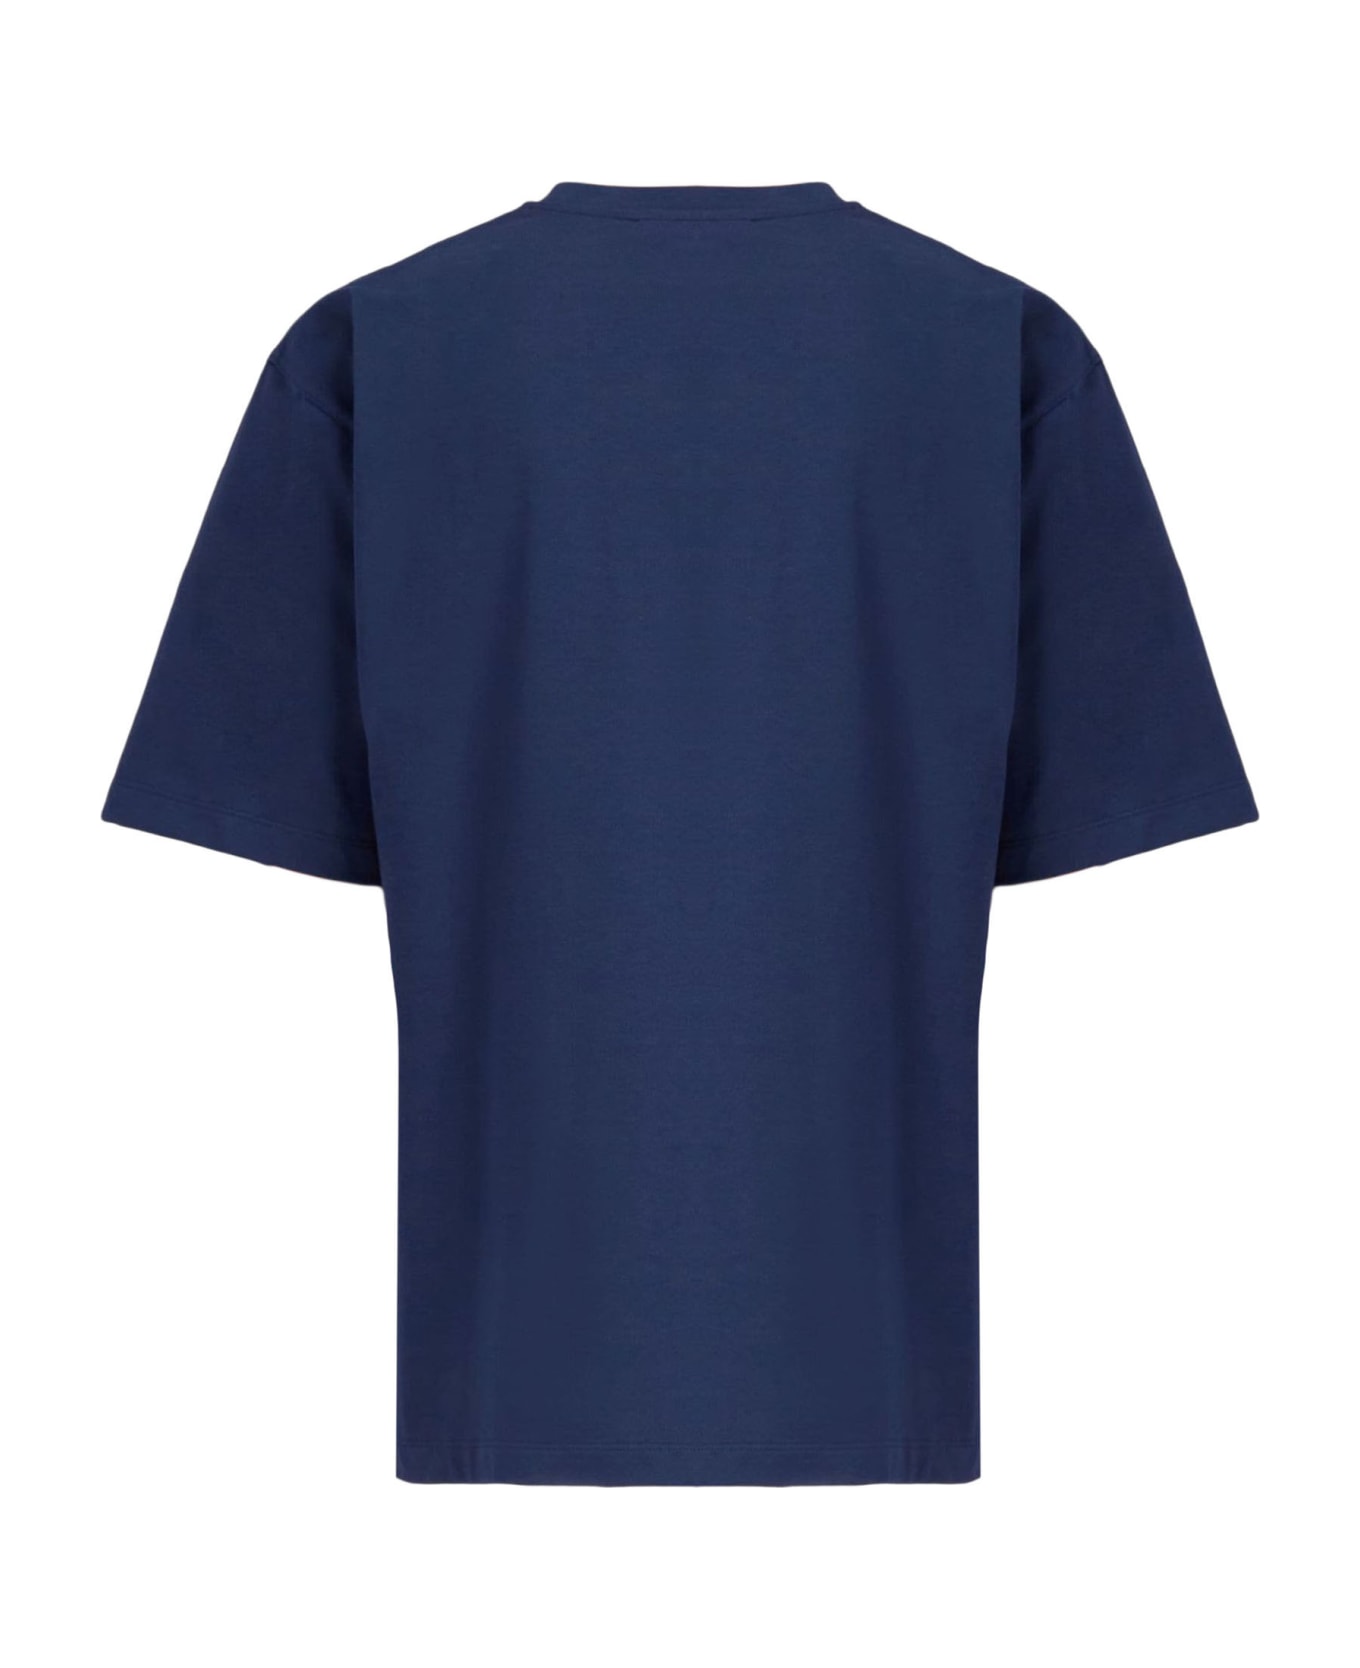 Marni Navy Blue Cotton T-shirt - Blue